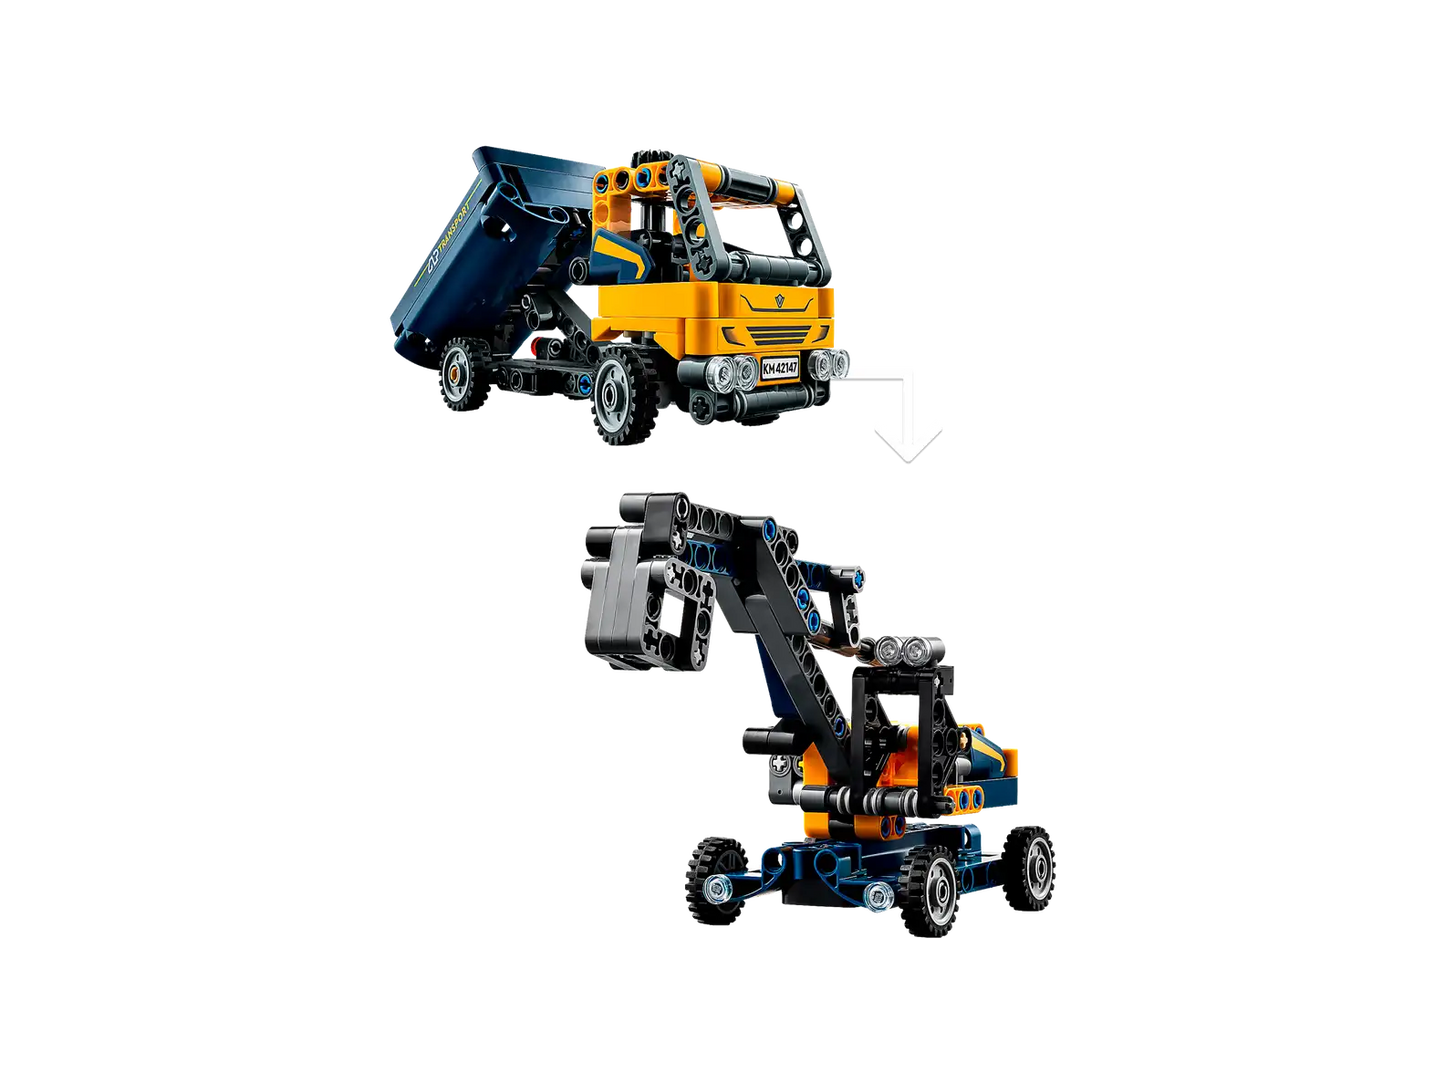 Lego - Technic, Dump Truck